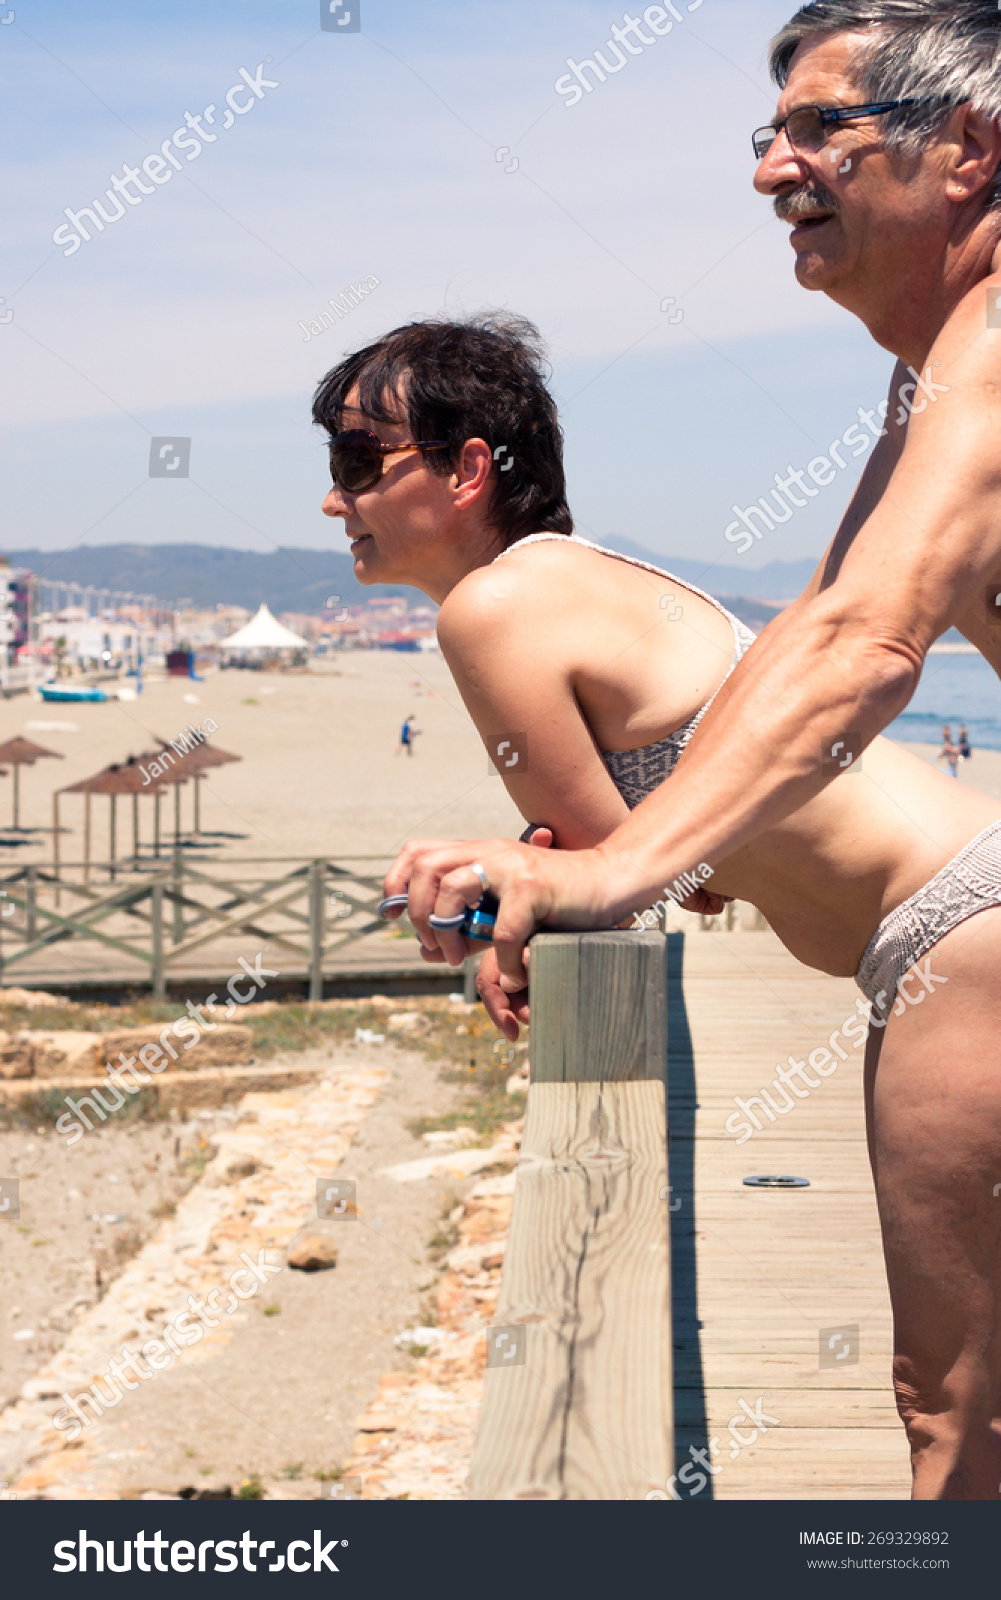 anita mohnot share amateur topless beach photos